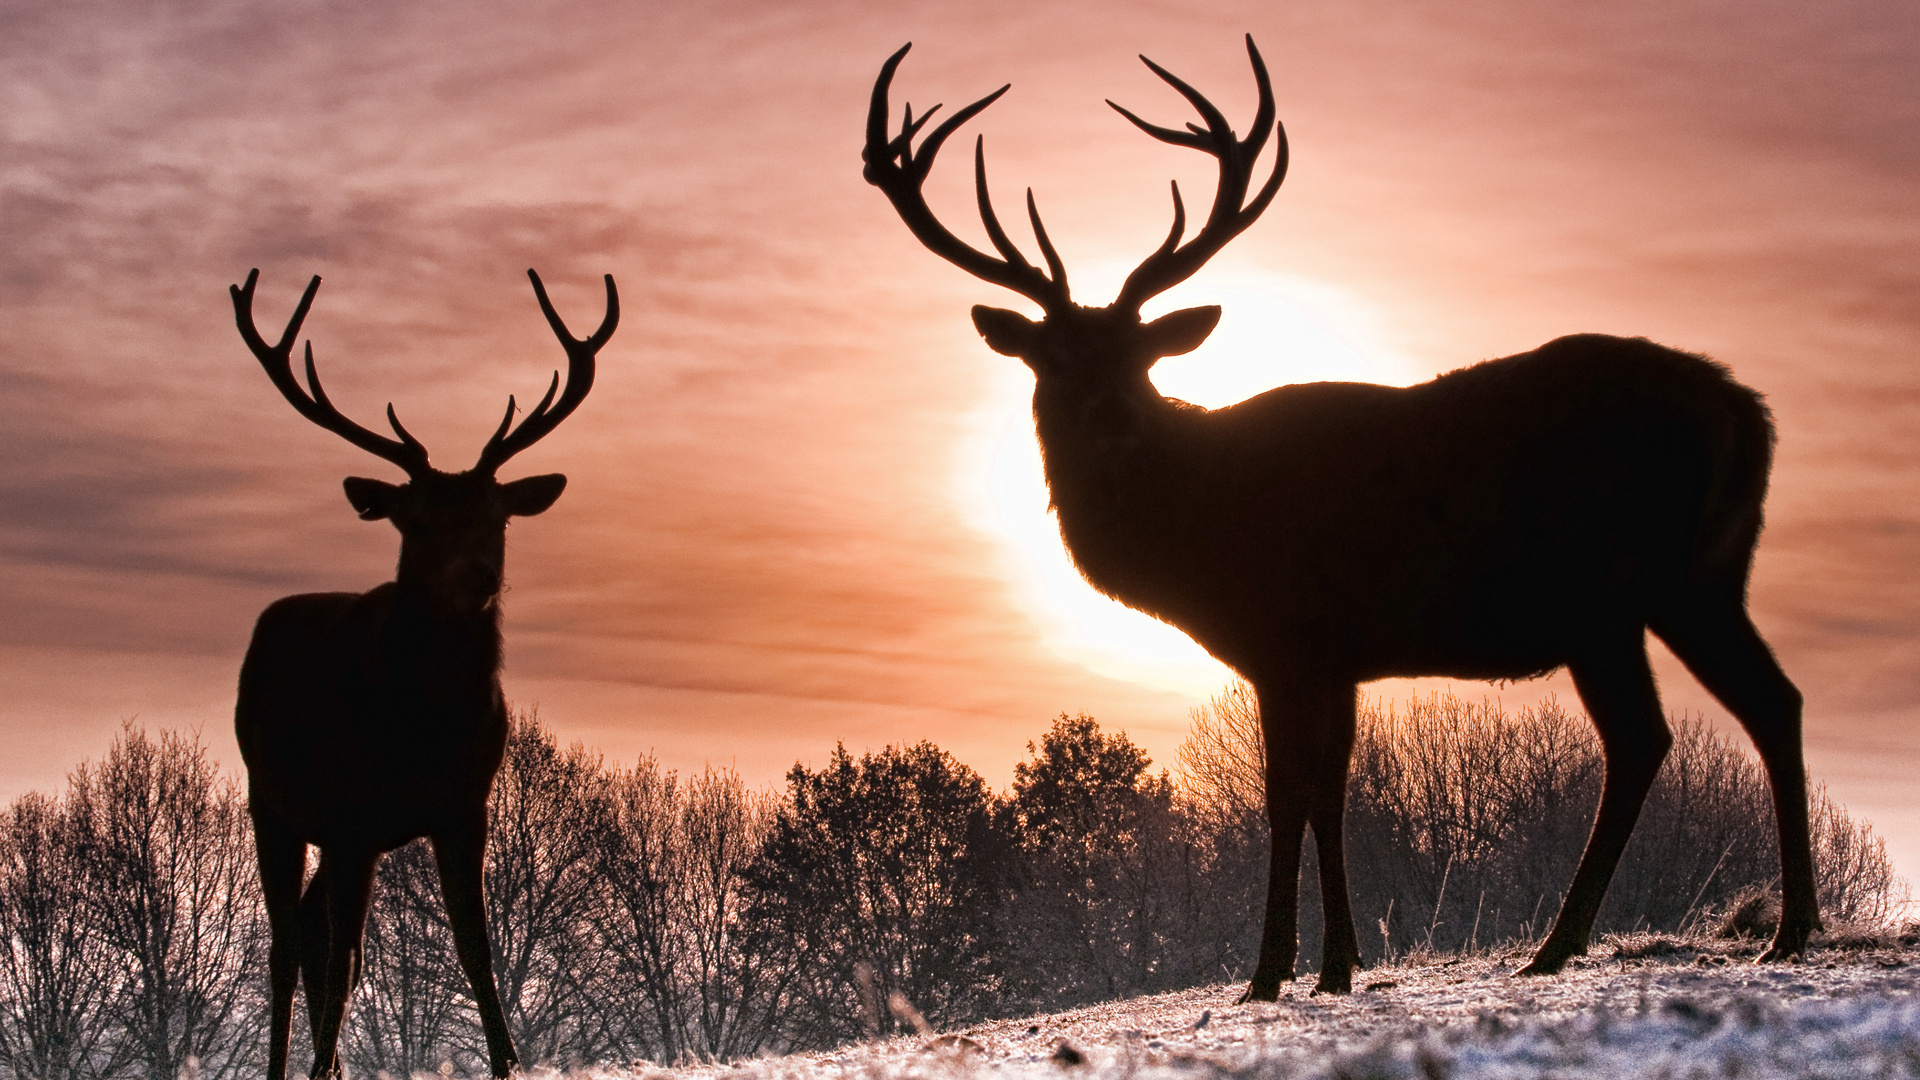 Deer images HD Free Download.